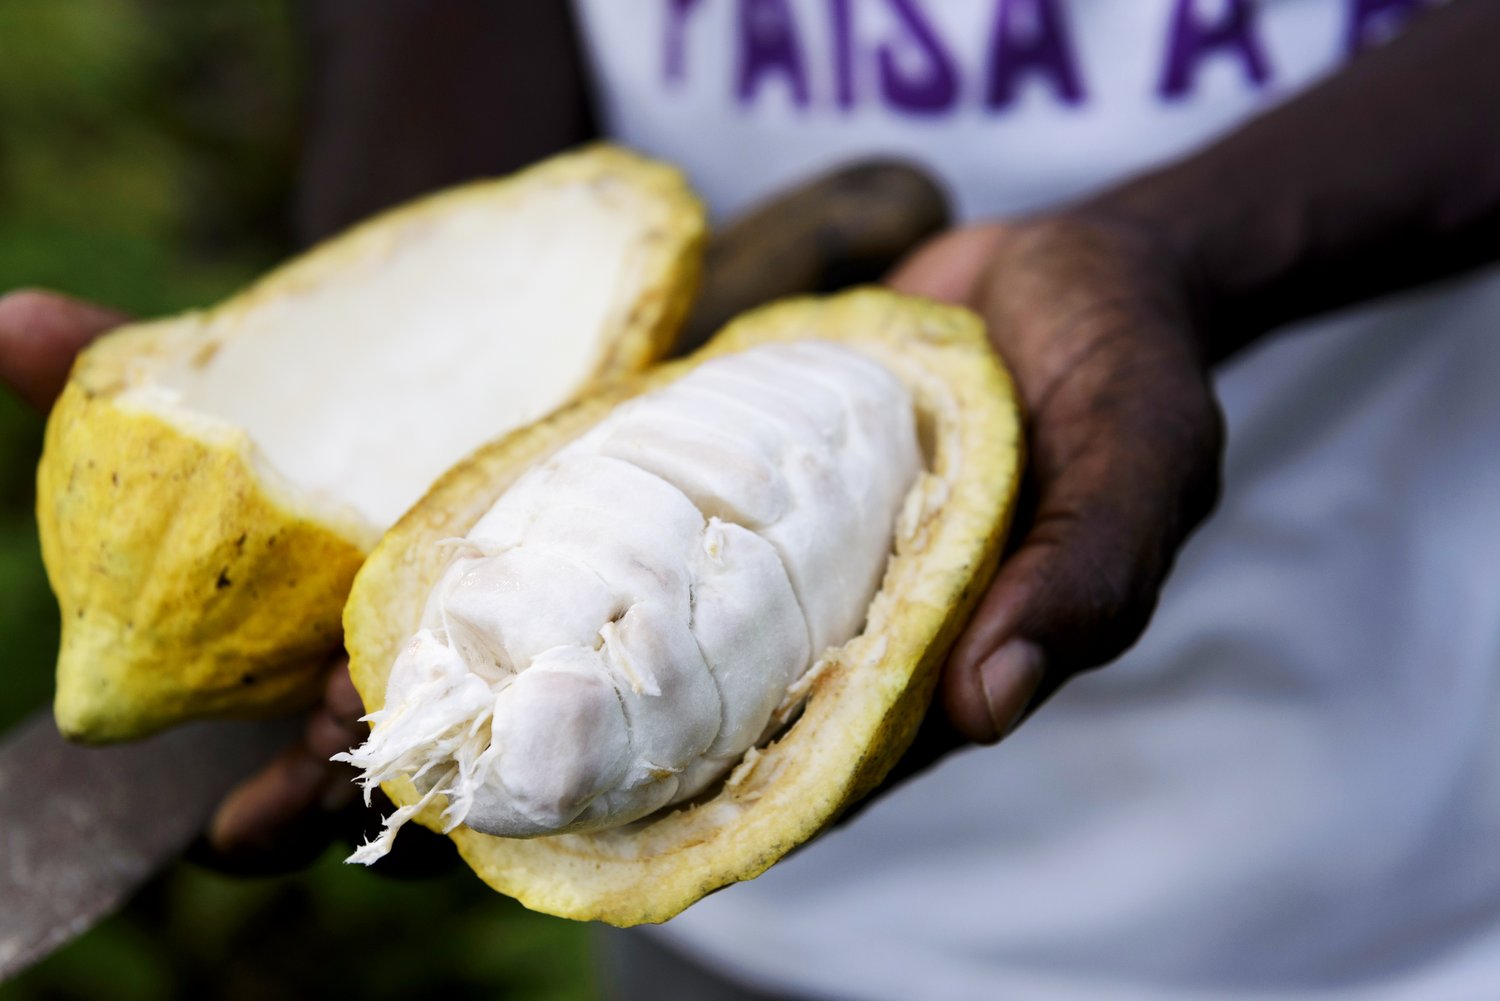 The Inspiring Fortitude of Tumaqueño Cacao